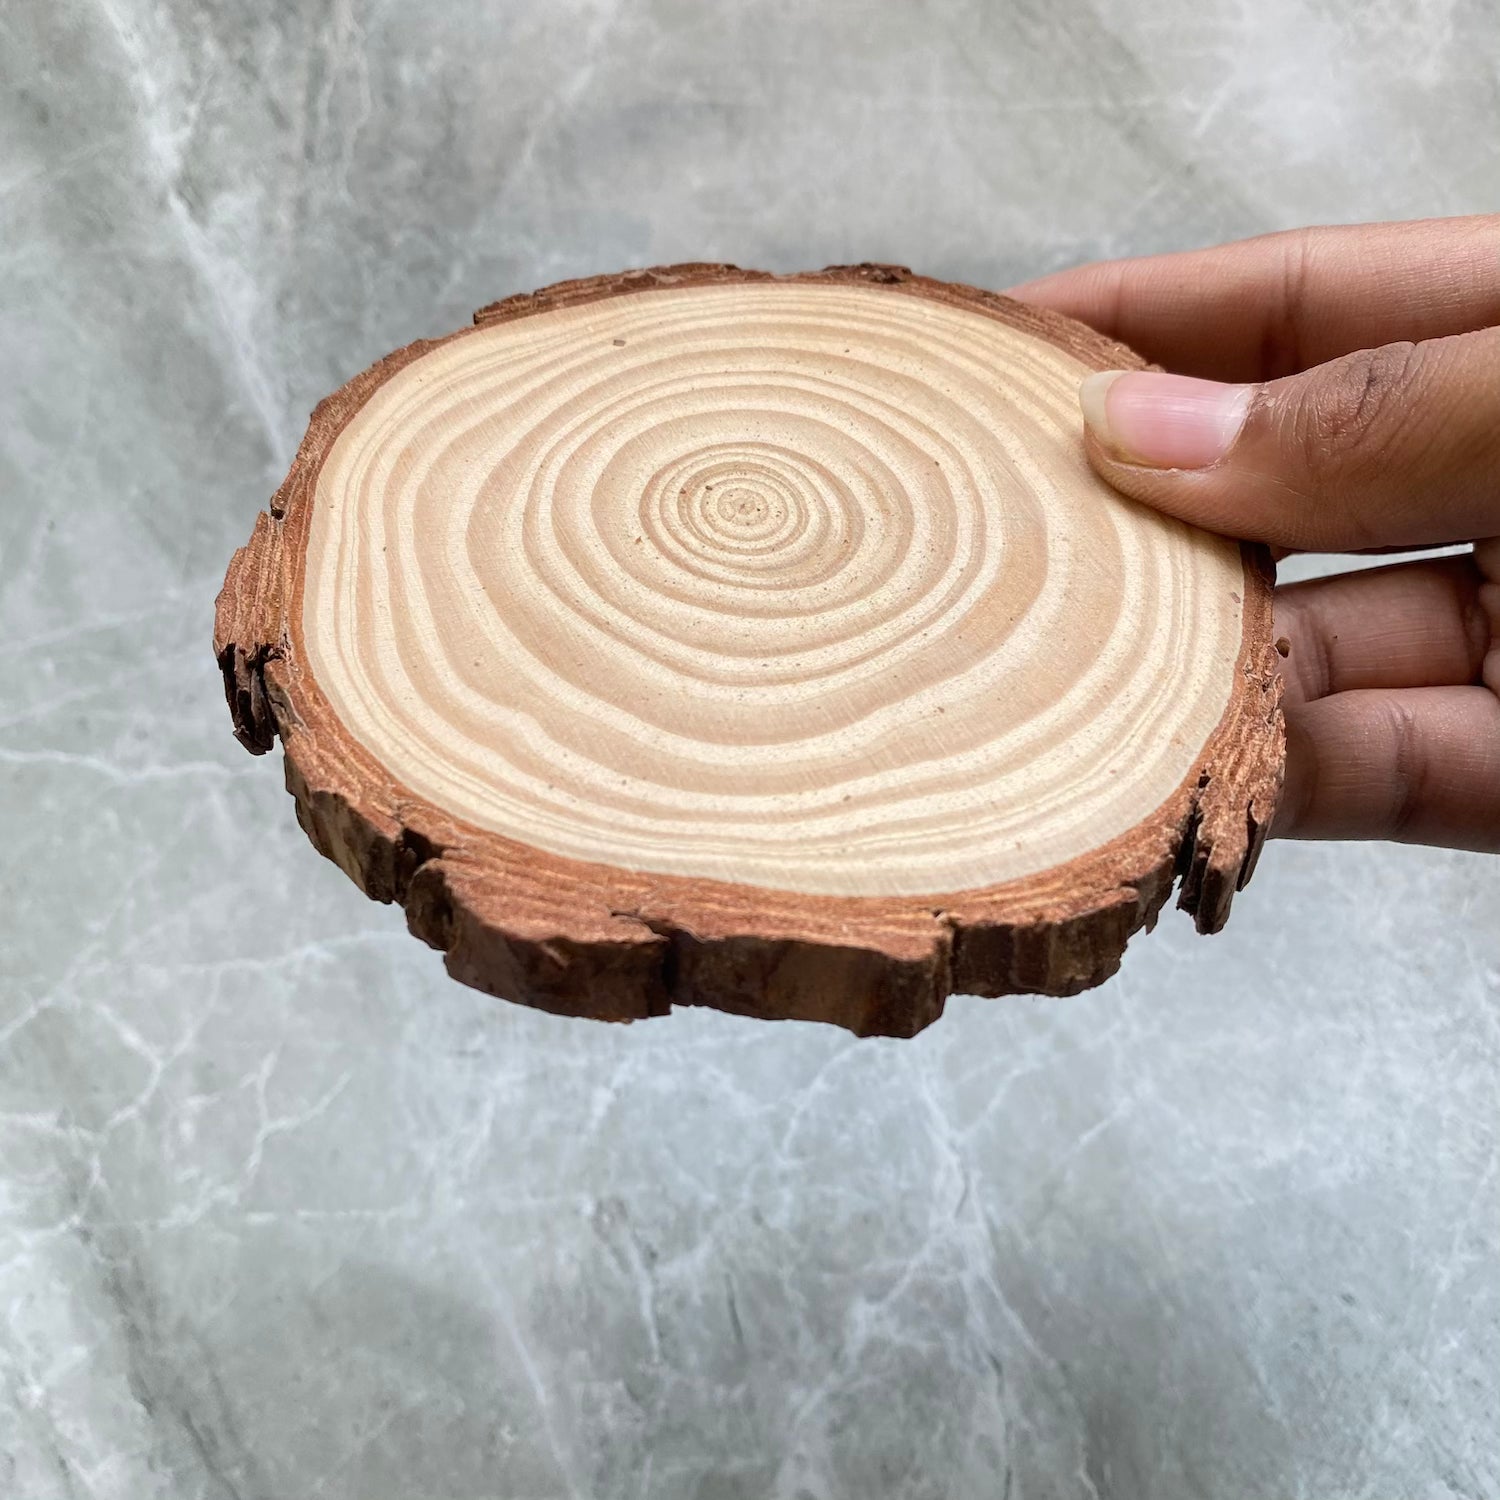 4 inch wood log